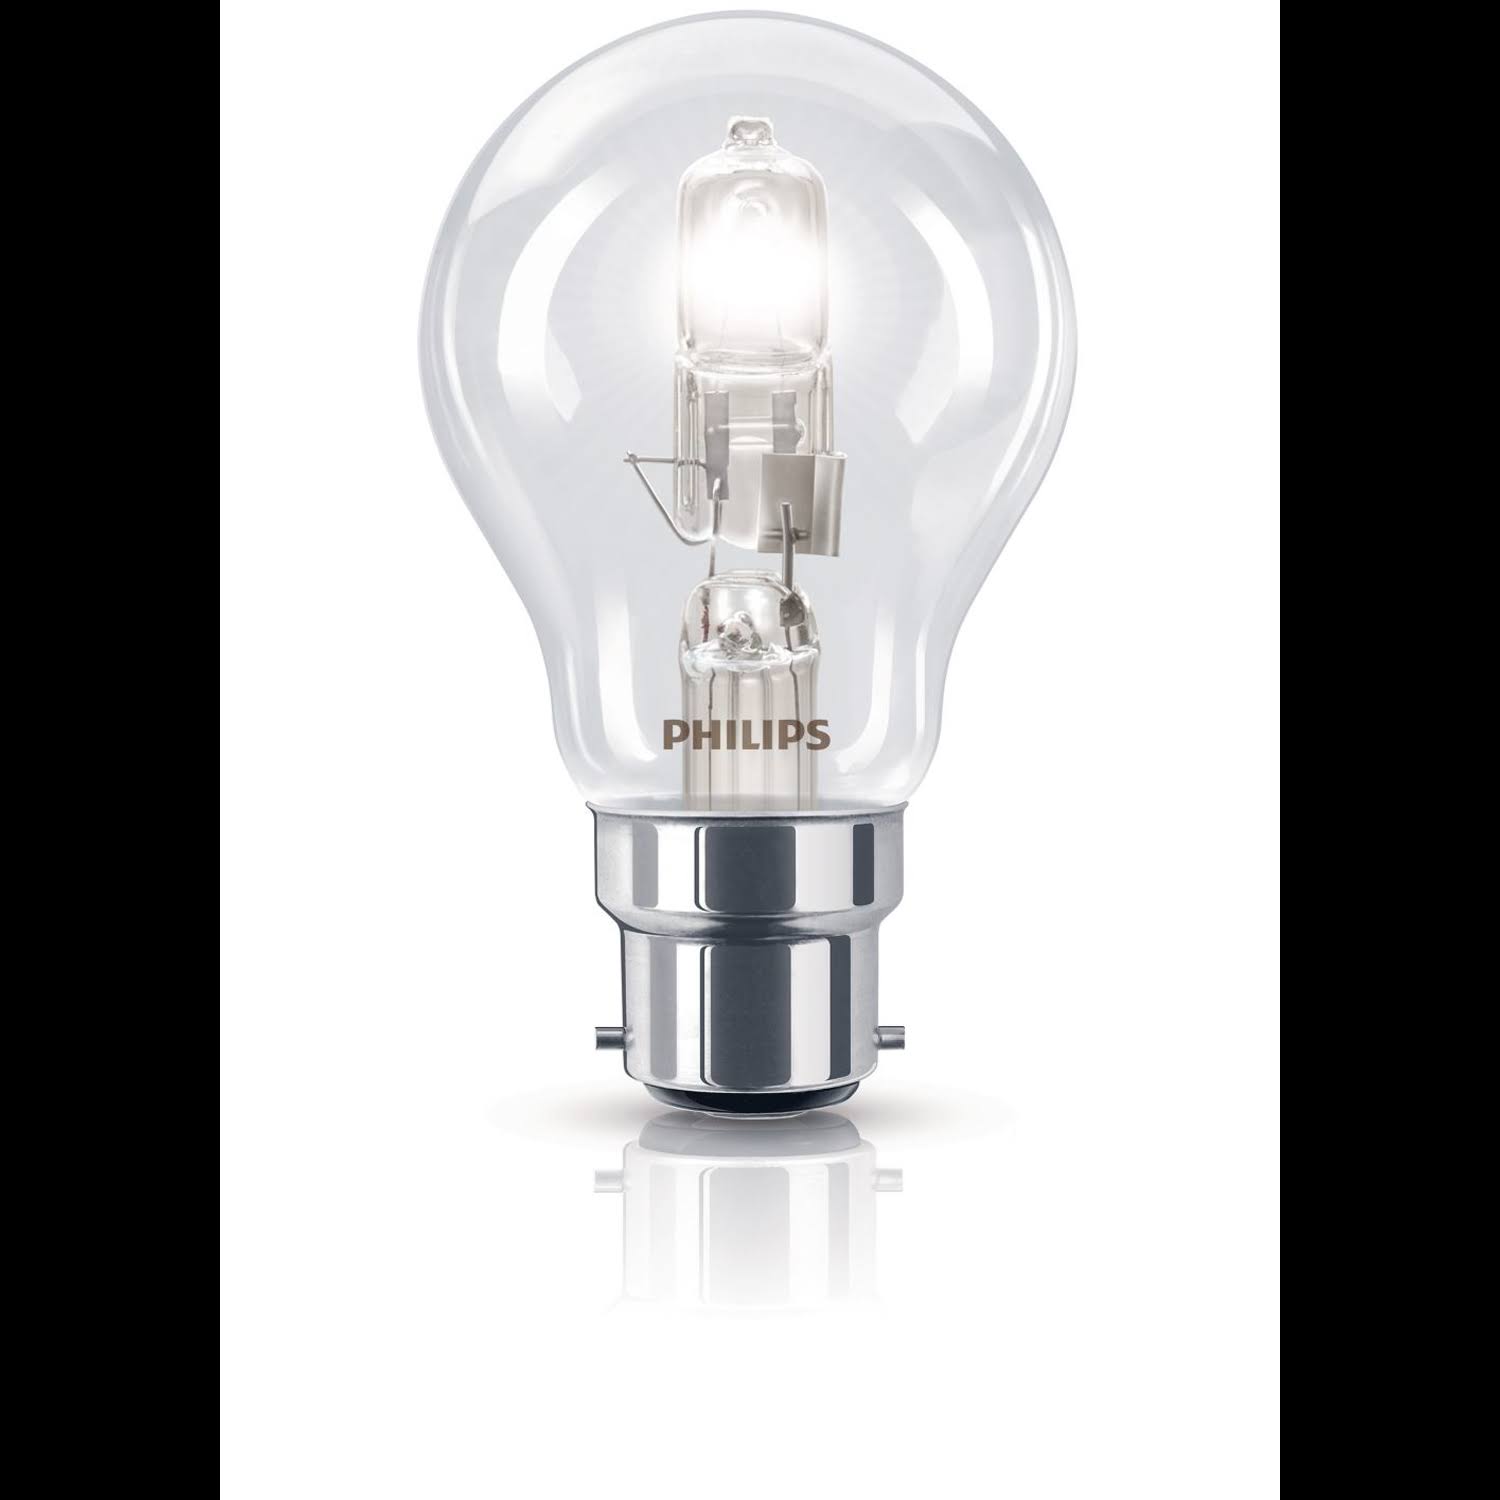 Philips Halogen Classic Bulb - Warm White, 35W